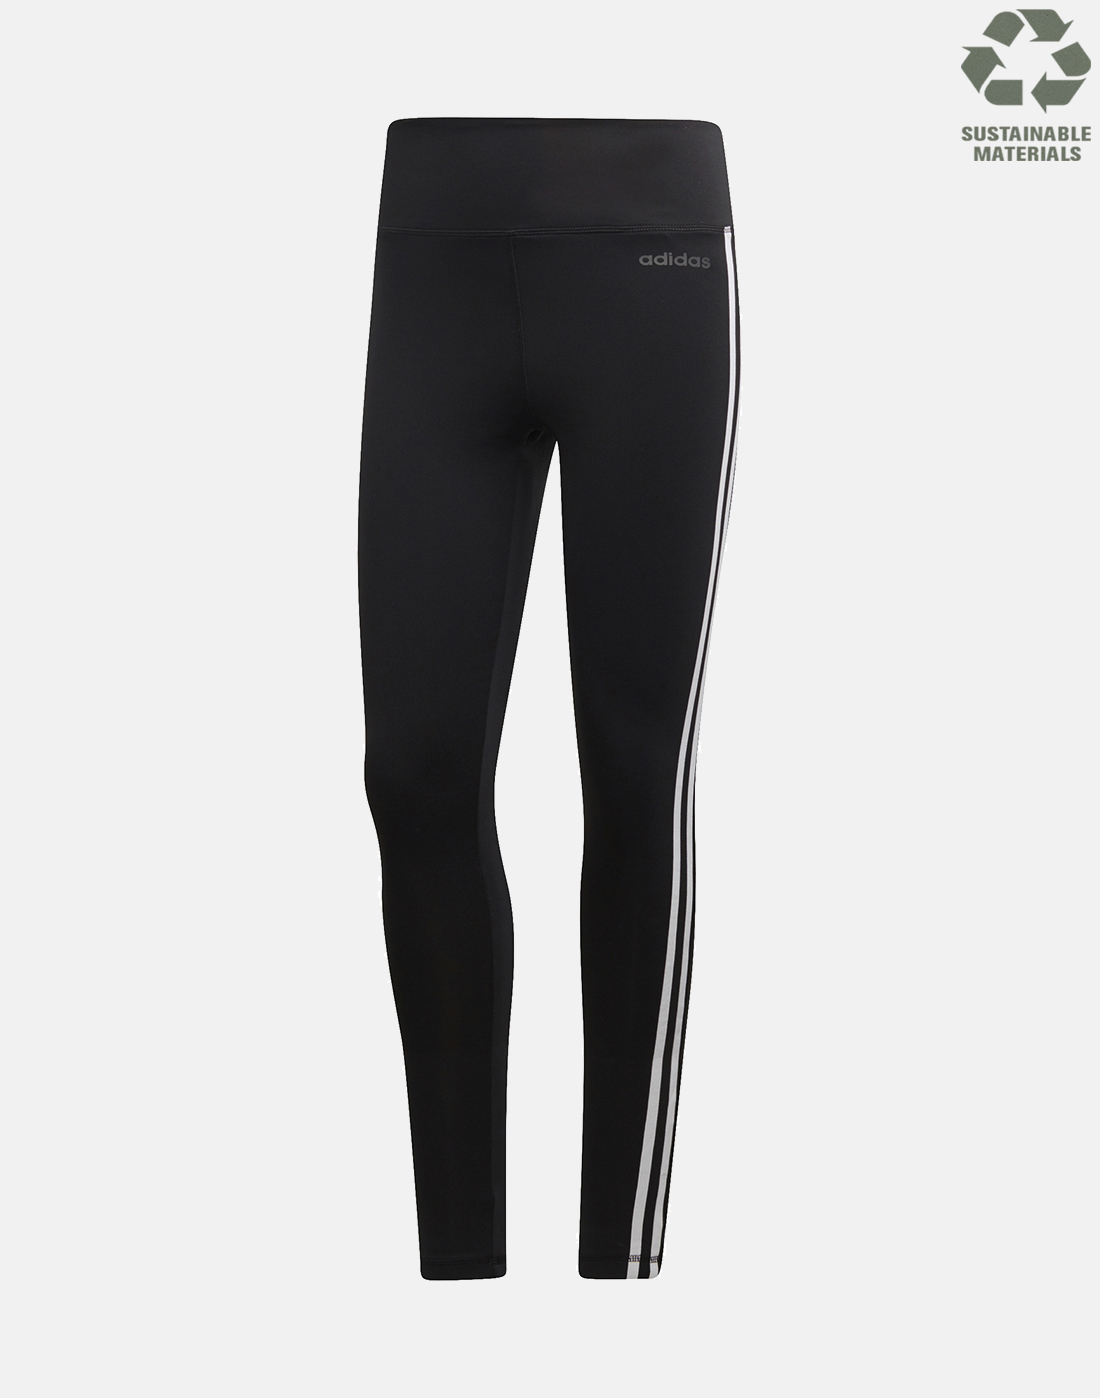 adidas 3 stripe leggings black and white